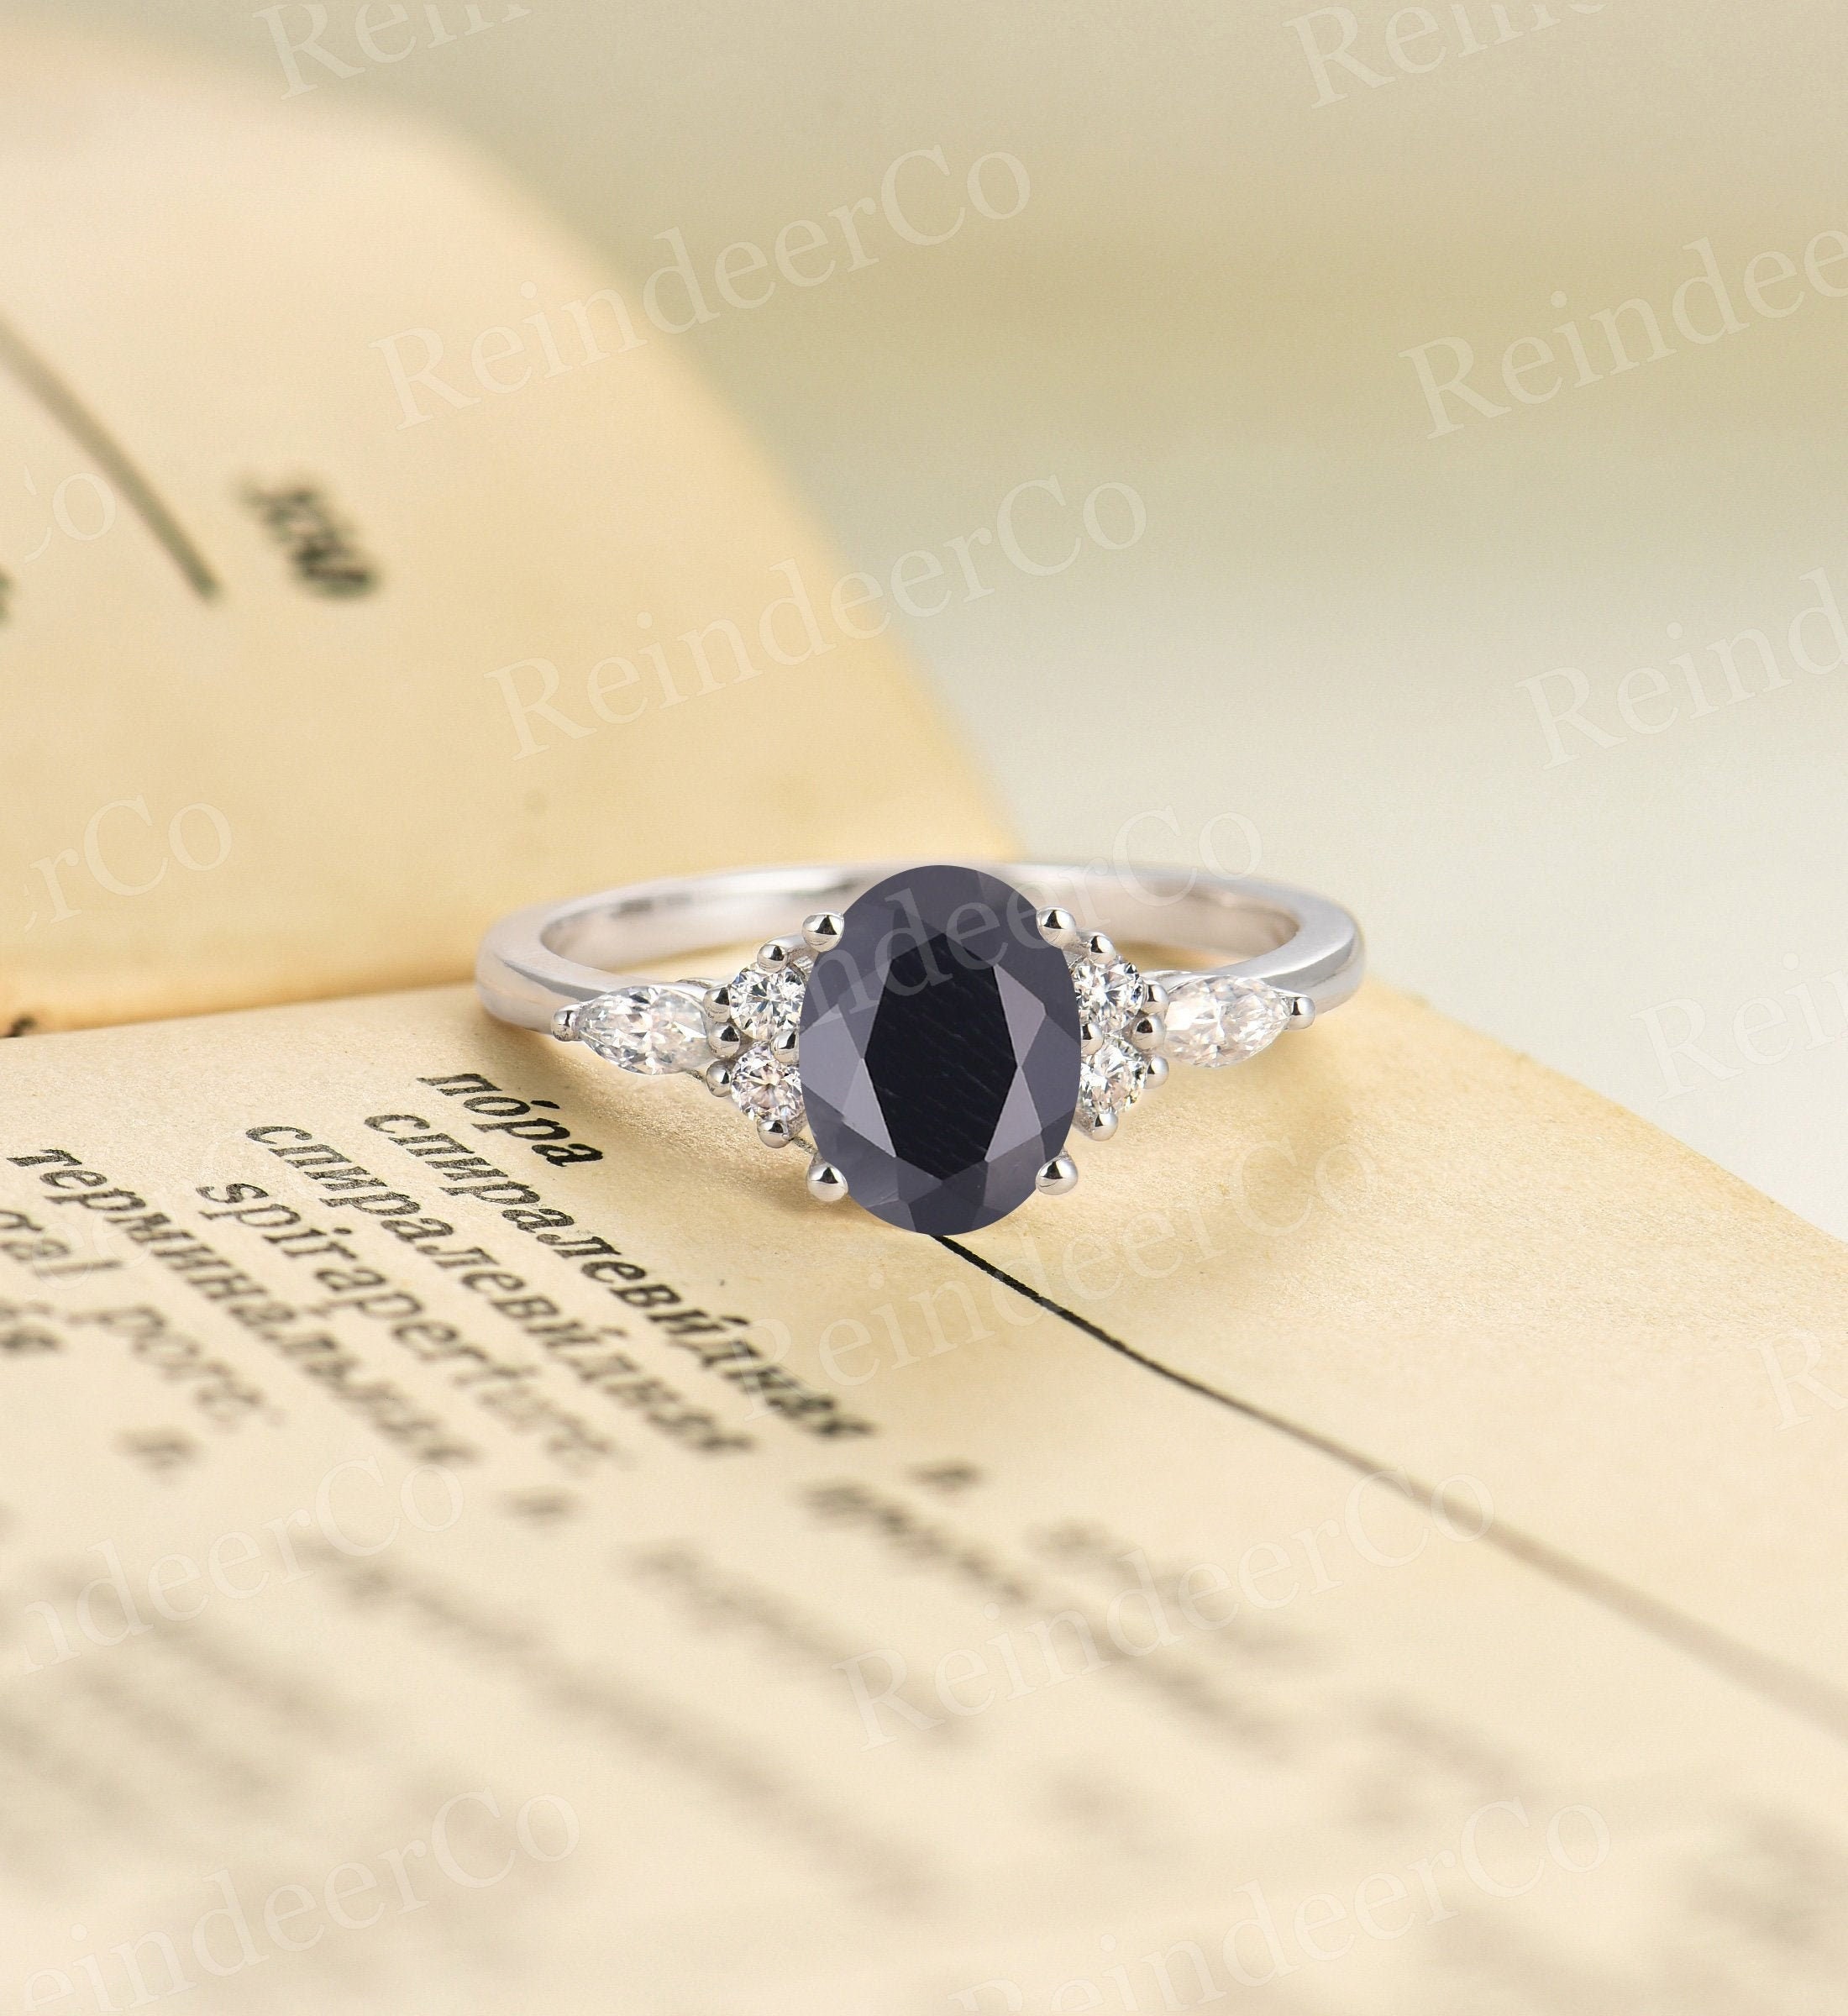 Vintage engagement ring white gold black onyx ring diamond | Etsy